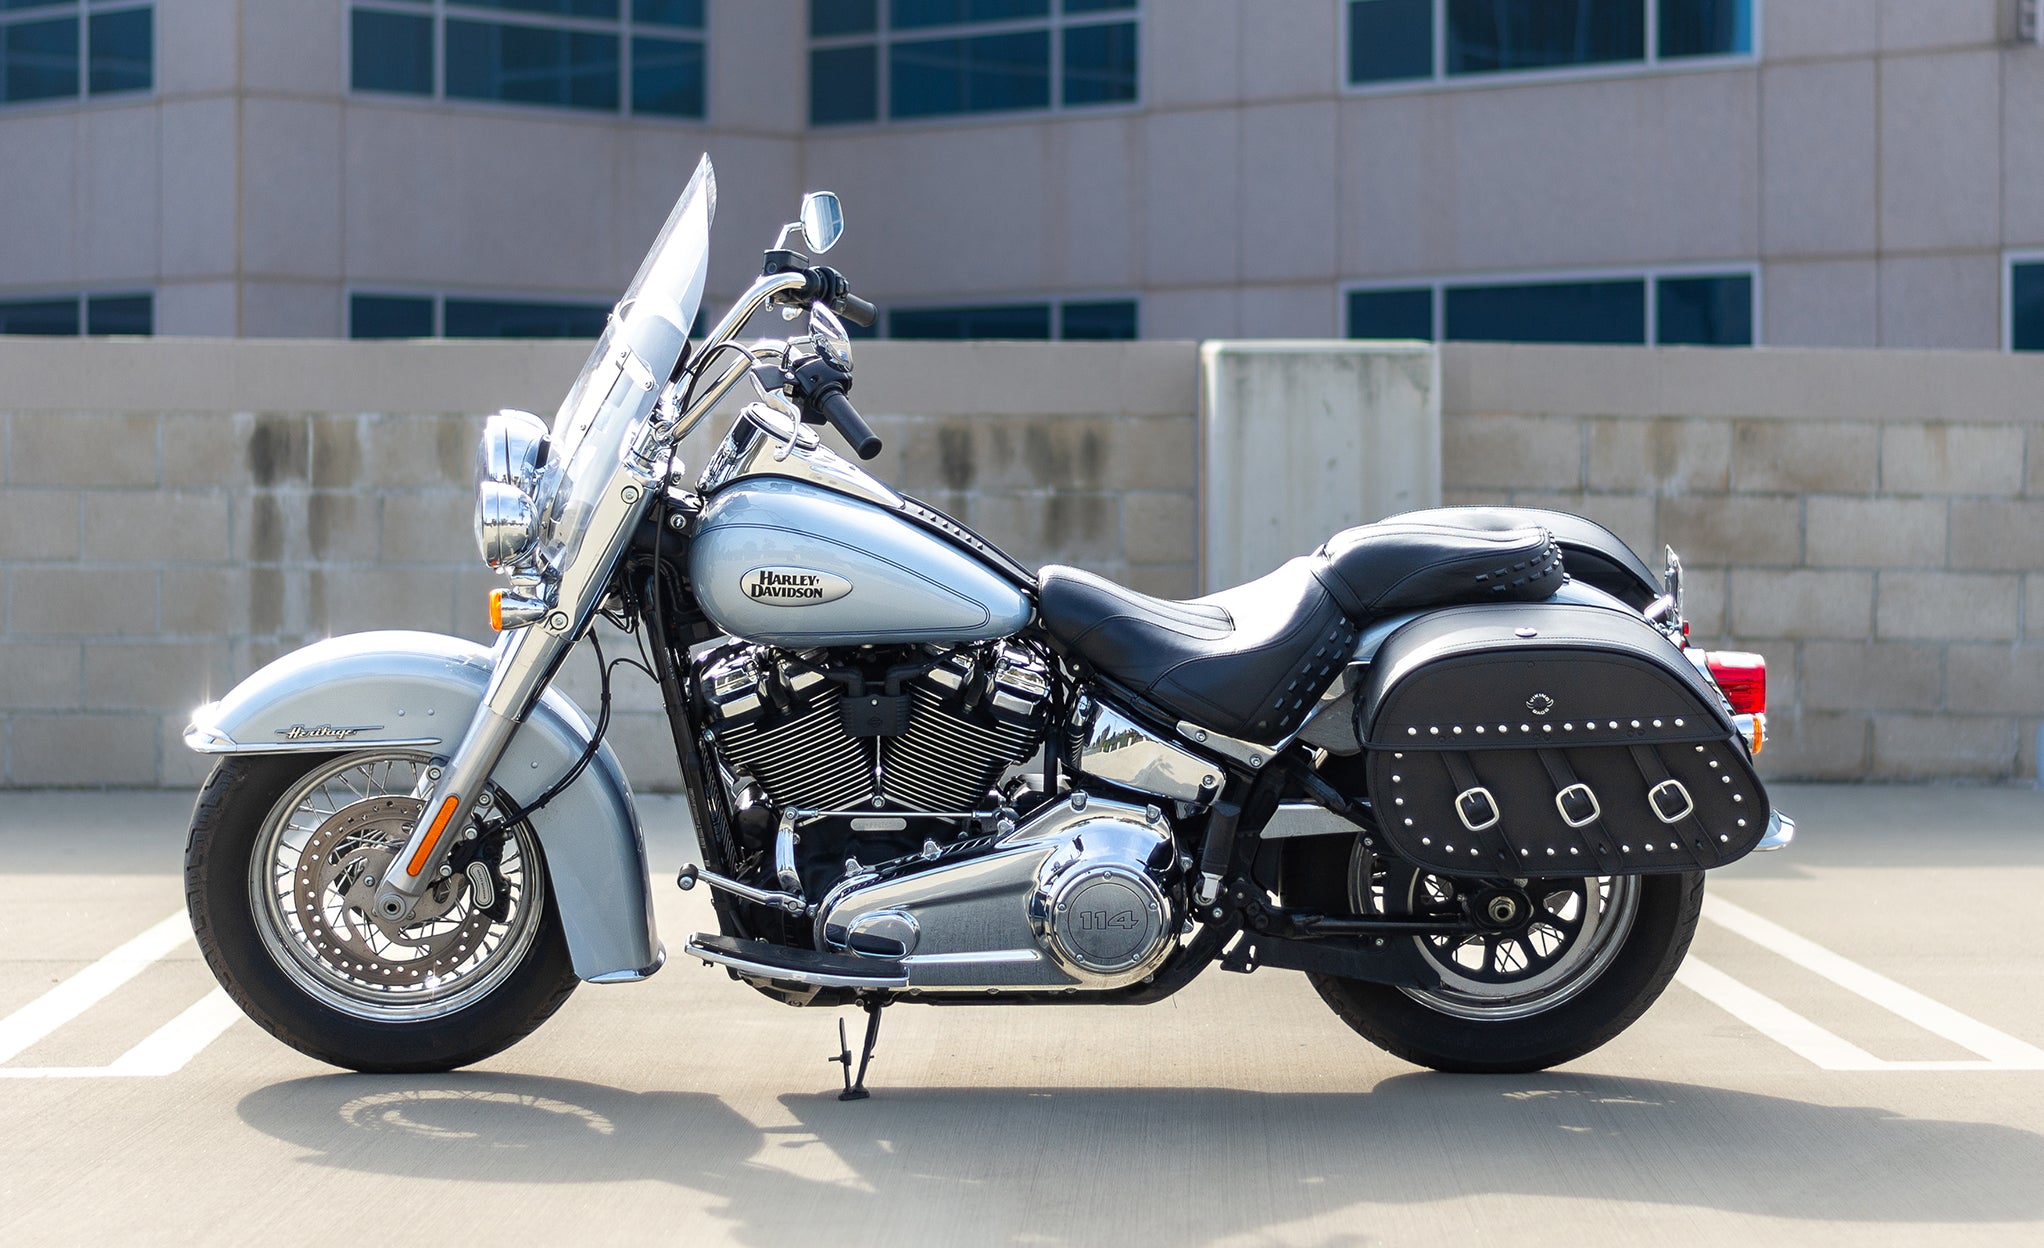 Viking Trianon Extra Large Studded Leather Motorcycle Saddlebags For Harley Softail Heritage Flst I C Ci @expand